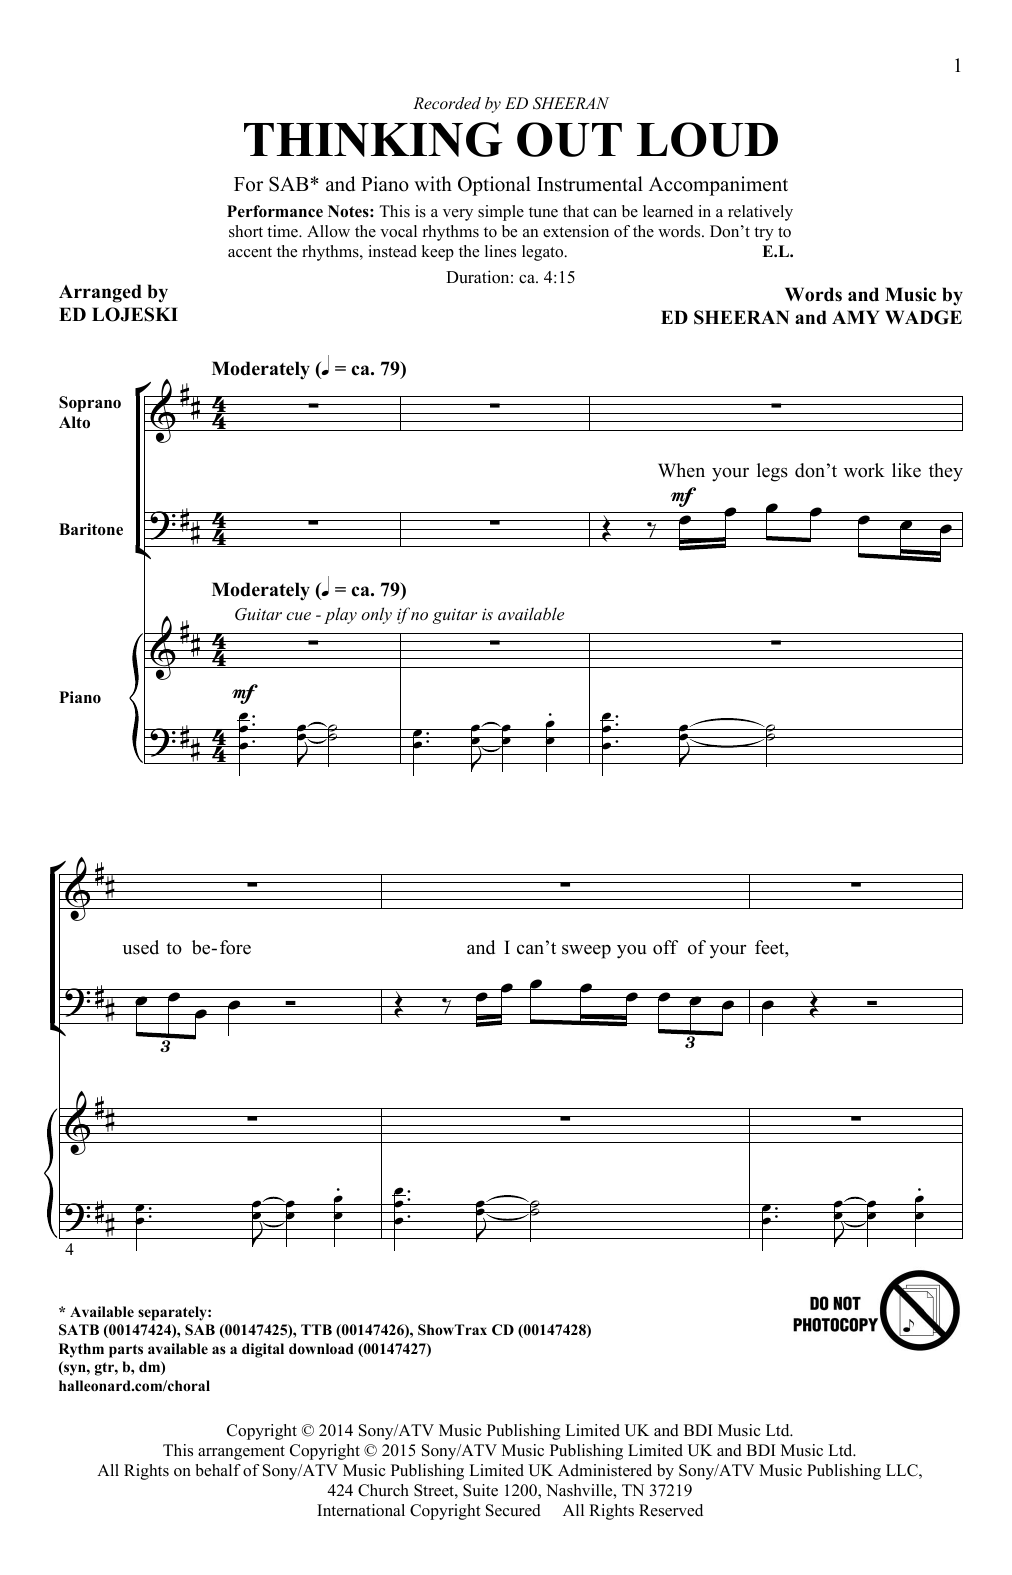 Ed Sheeran Thinking Out Loud (arr. Ed Lojeski) Sheet Music Notes & Chords for TTBB - Download or Print PDF